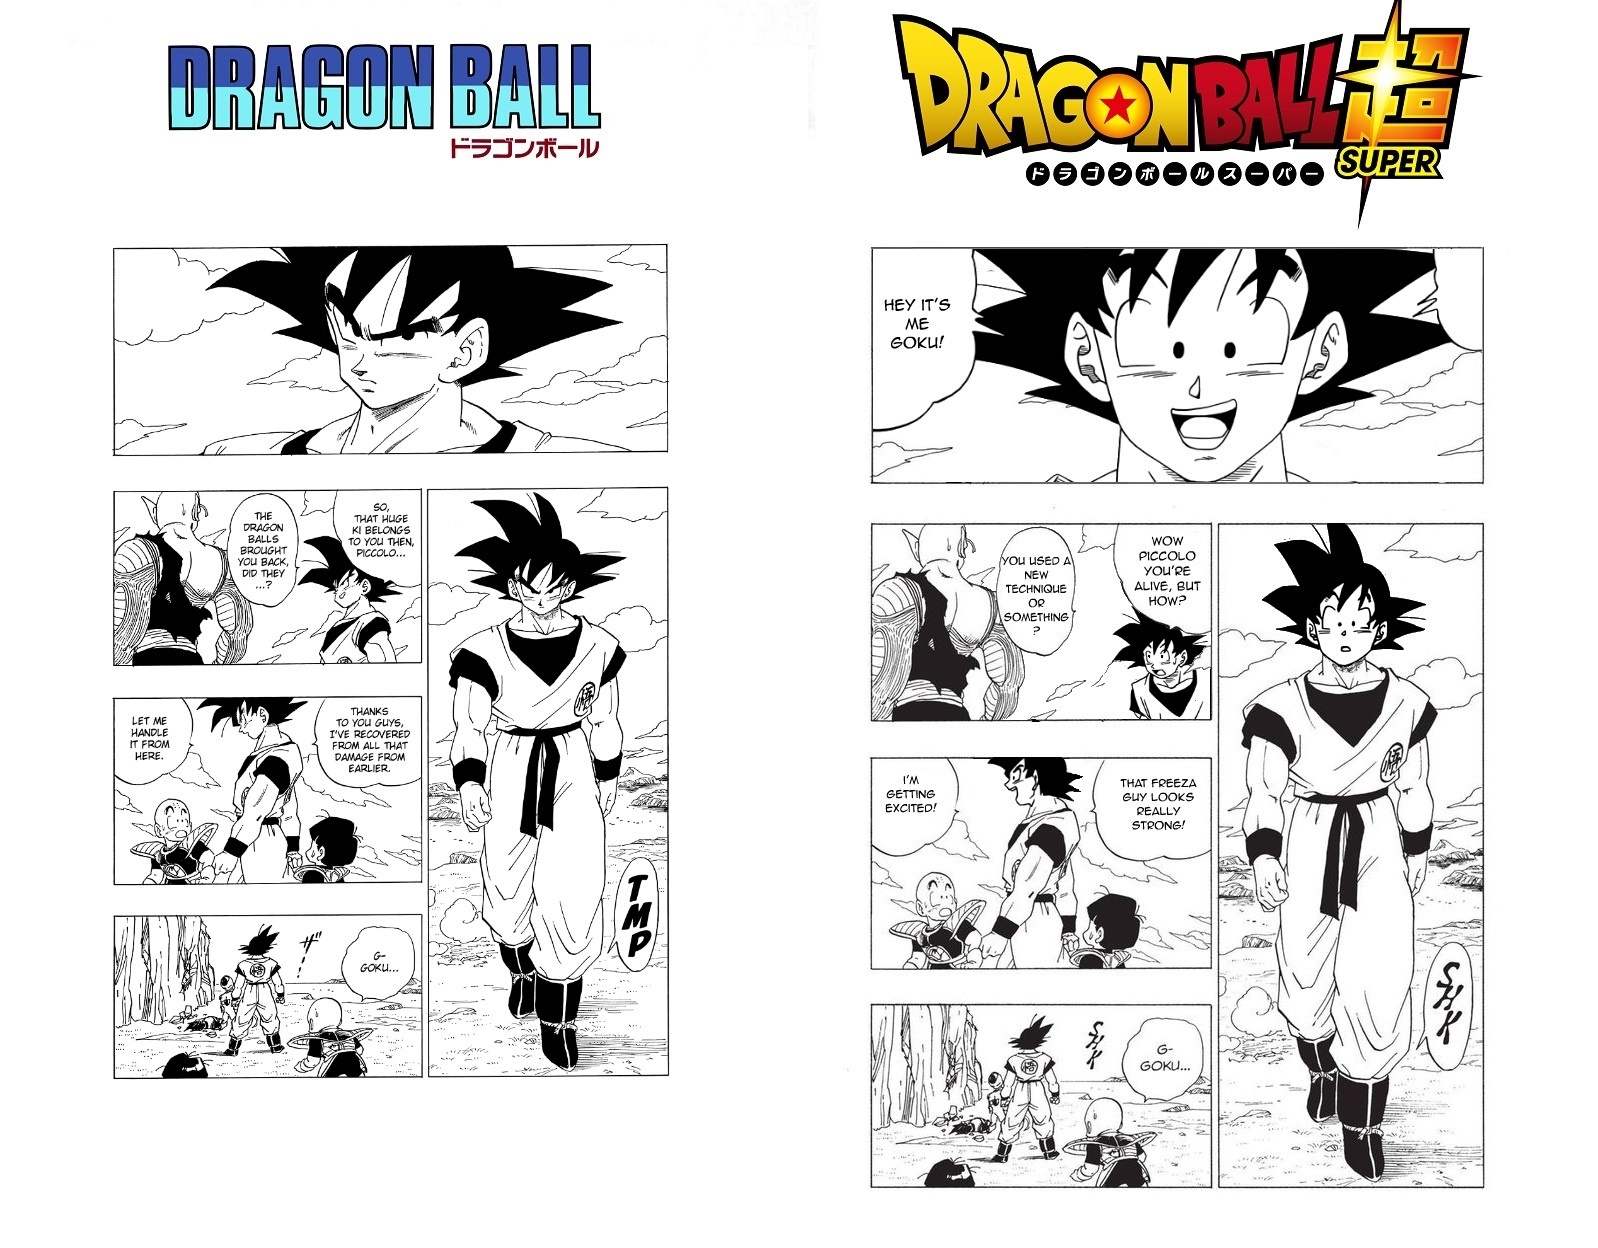 The Cream Games - Oh. So, in the manga, Goku can use Super Saiyan